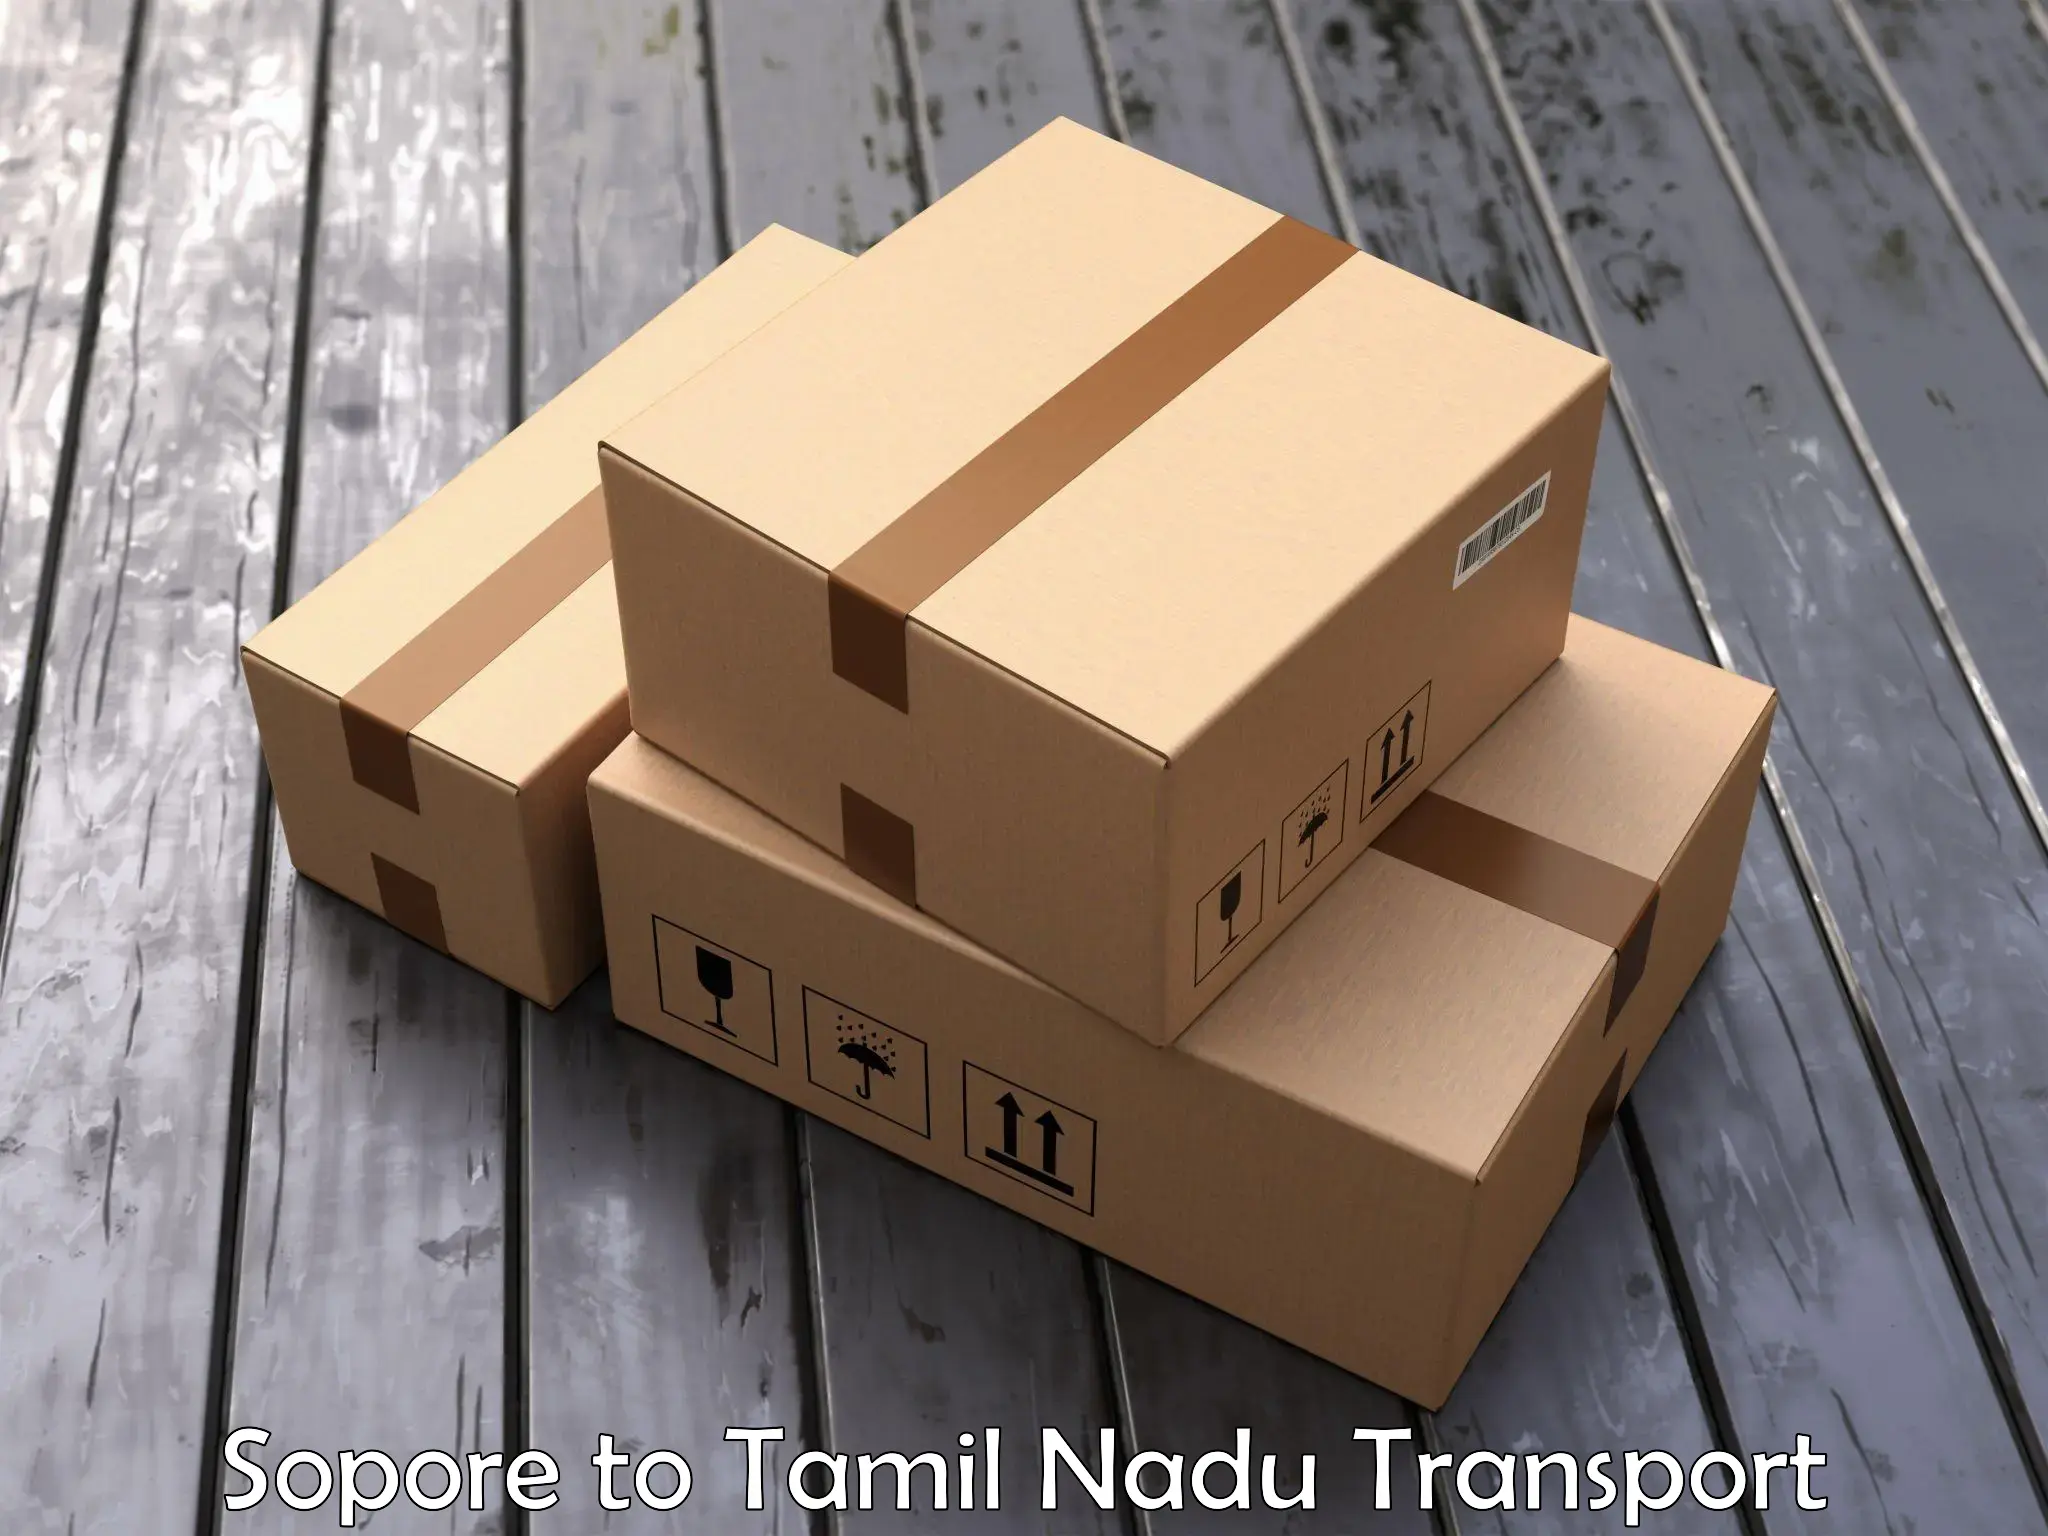 Online transport service Sopore to Tiruchirappalli